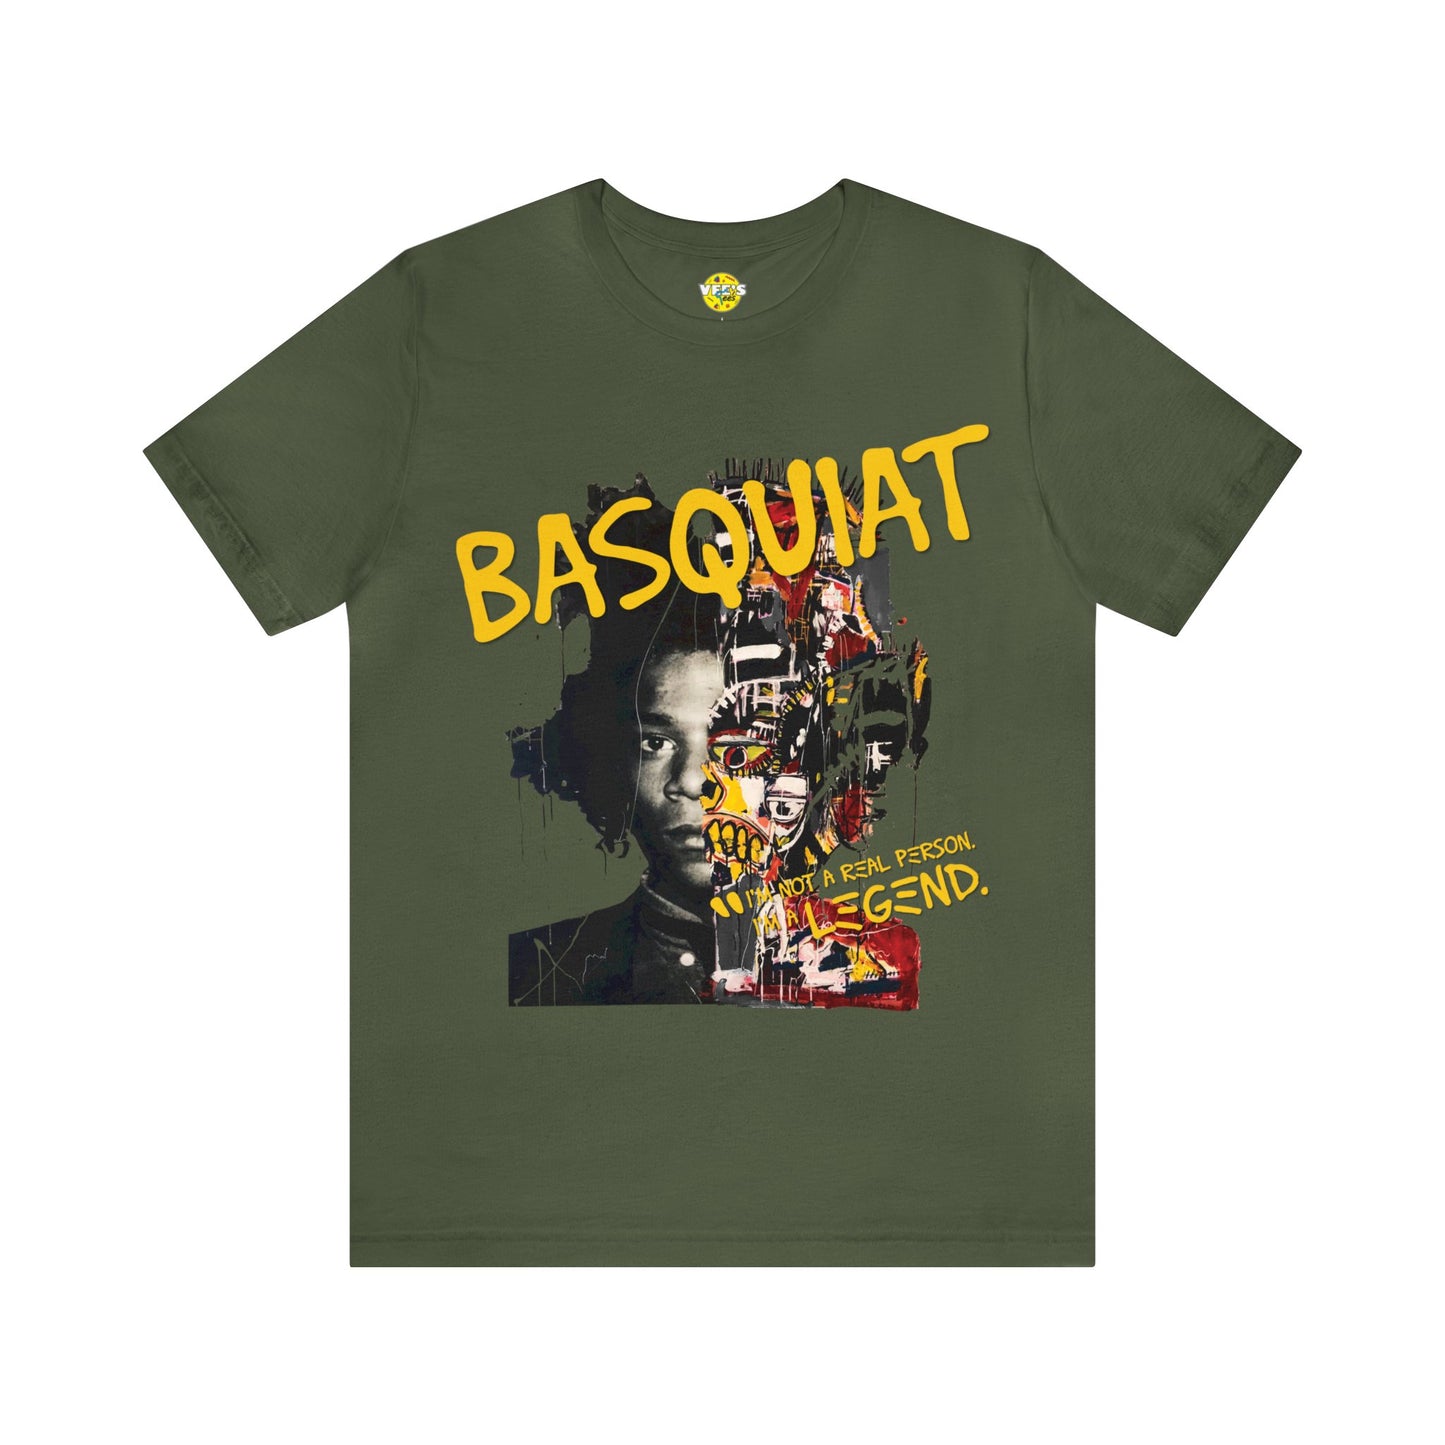 Basquiat Portrait Urban Art Icon Shirt, Jean-Michel Basquiat Quote Collage T-Shirt, Art Lover Fashion Graphic Tee, Black History Month